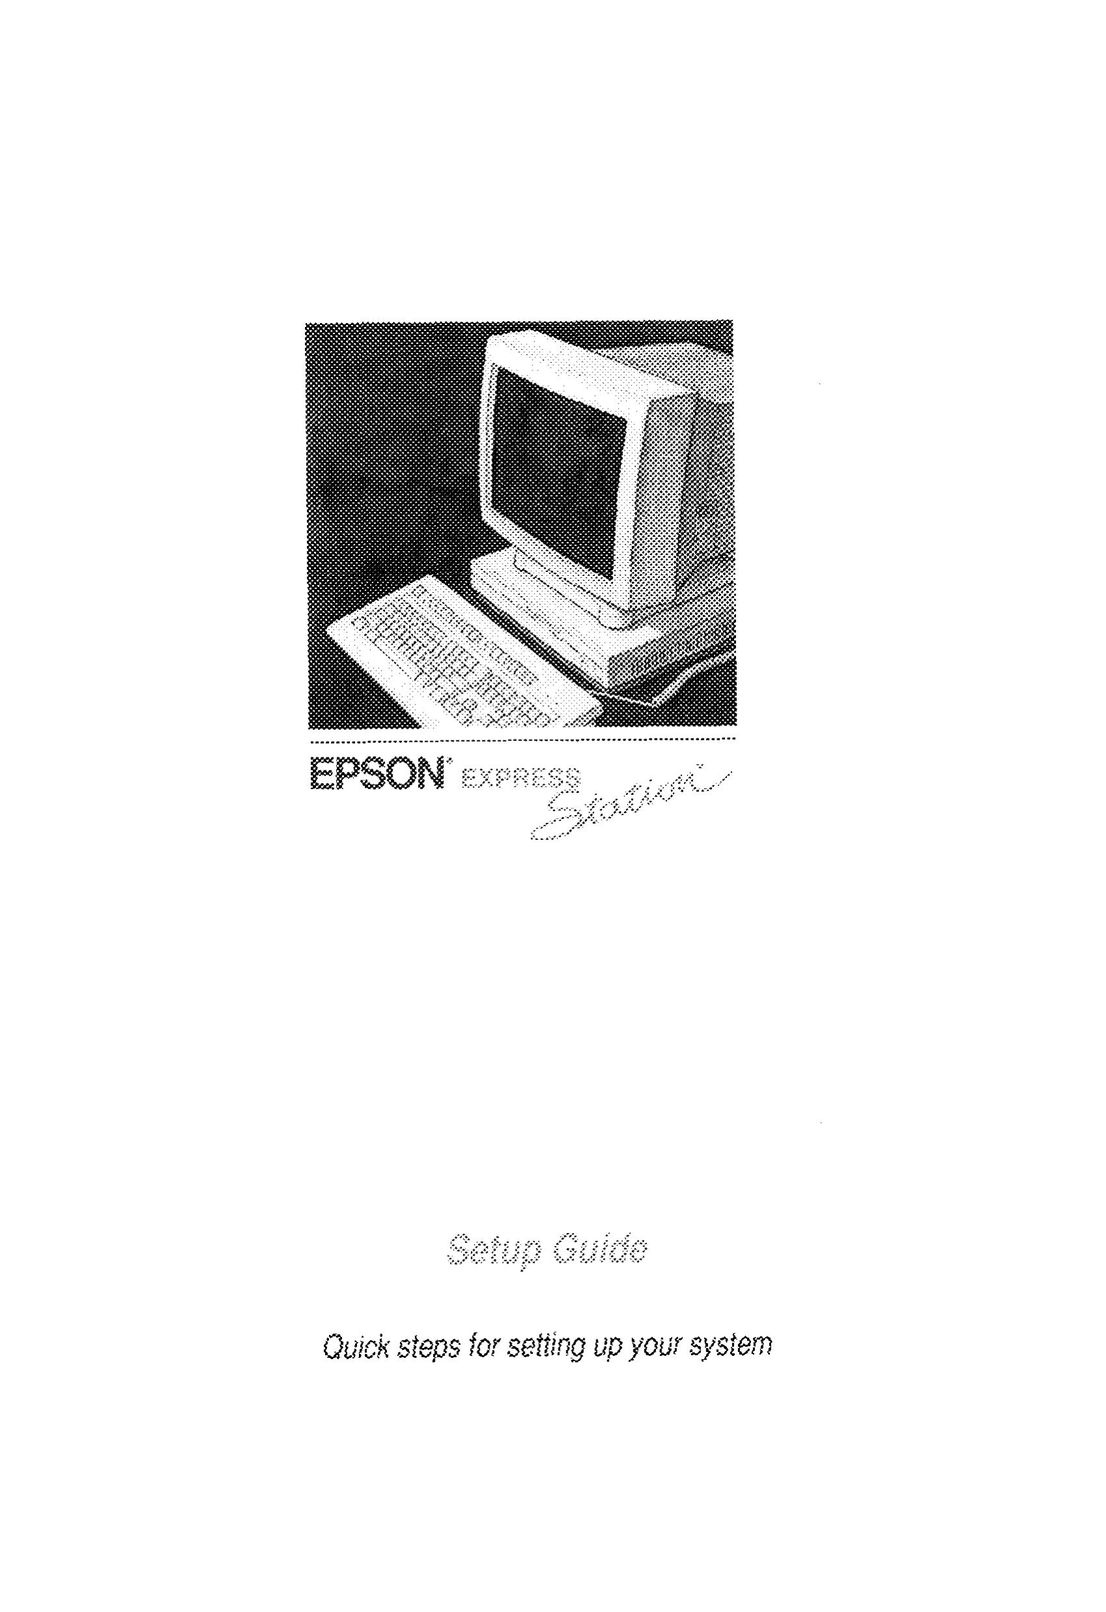 Epson Express Station Kitchen Entertainment Center User Manual